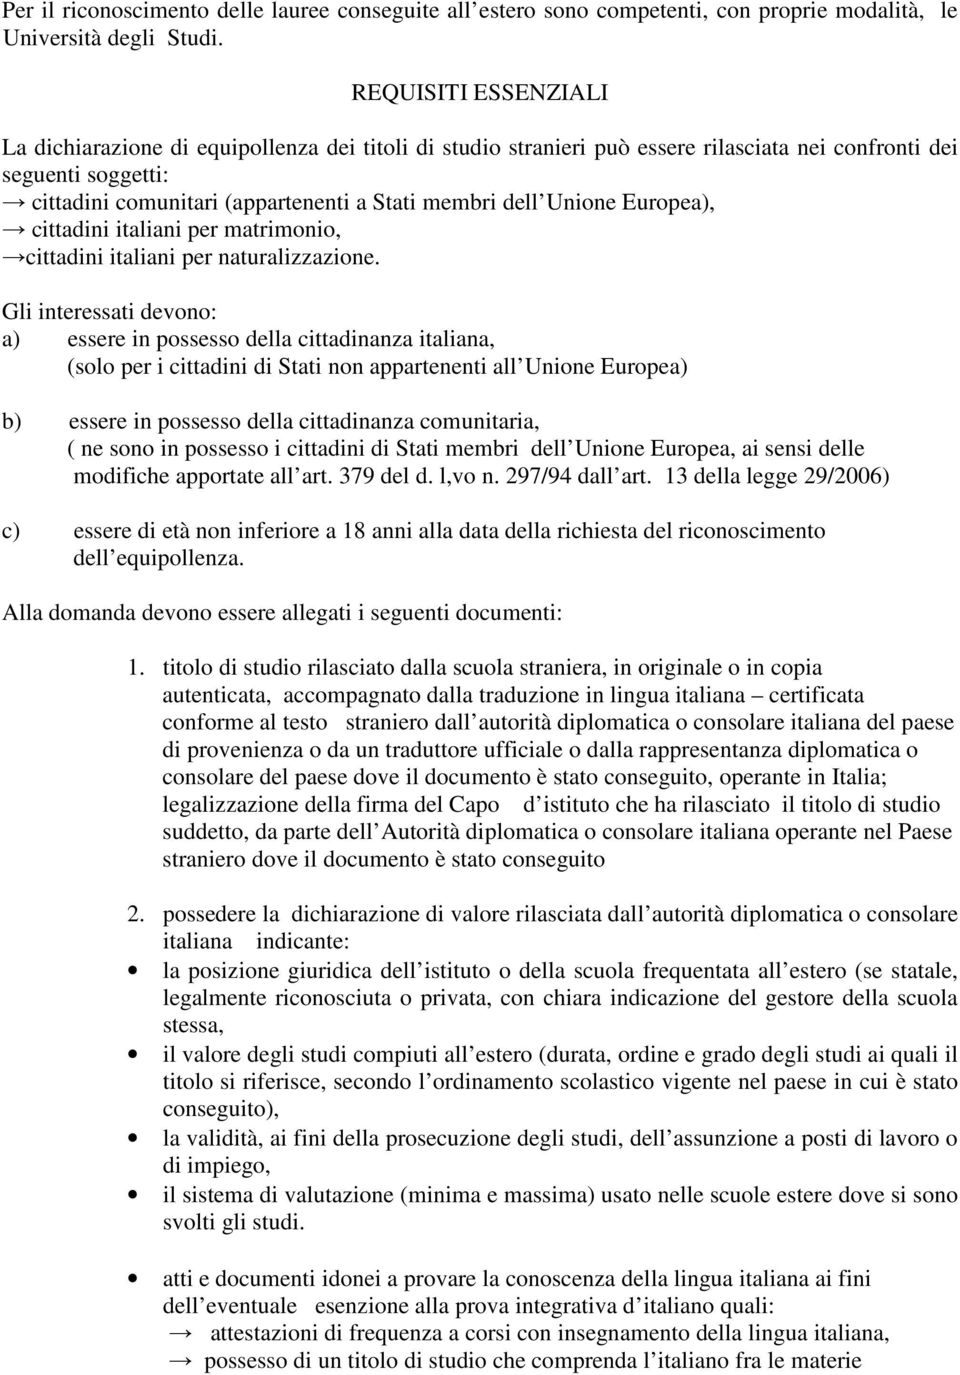 Unione Europea), cittadini italiani per matrimonio, cittadini italiani per naturalizzazione.